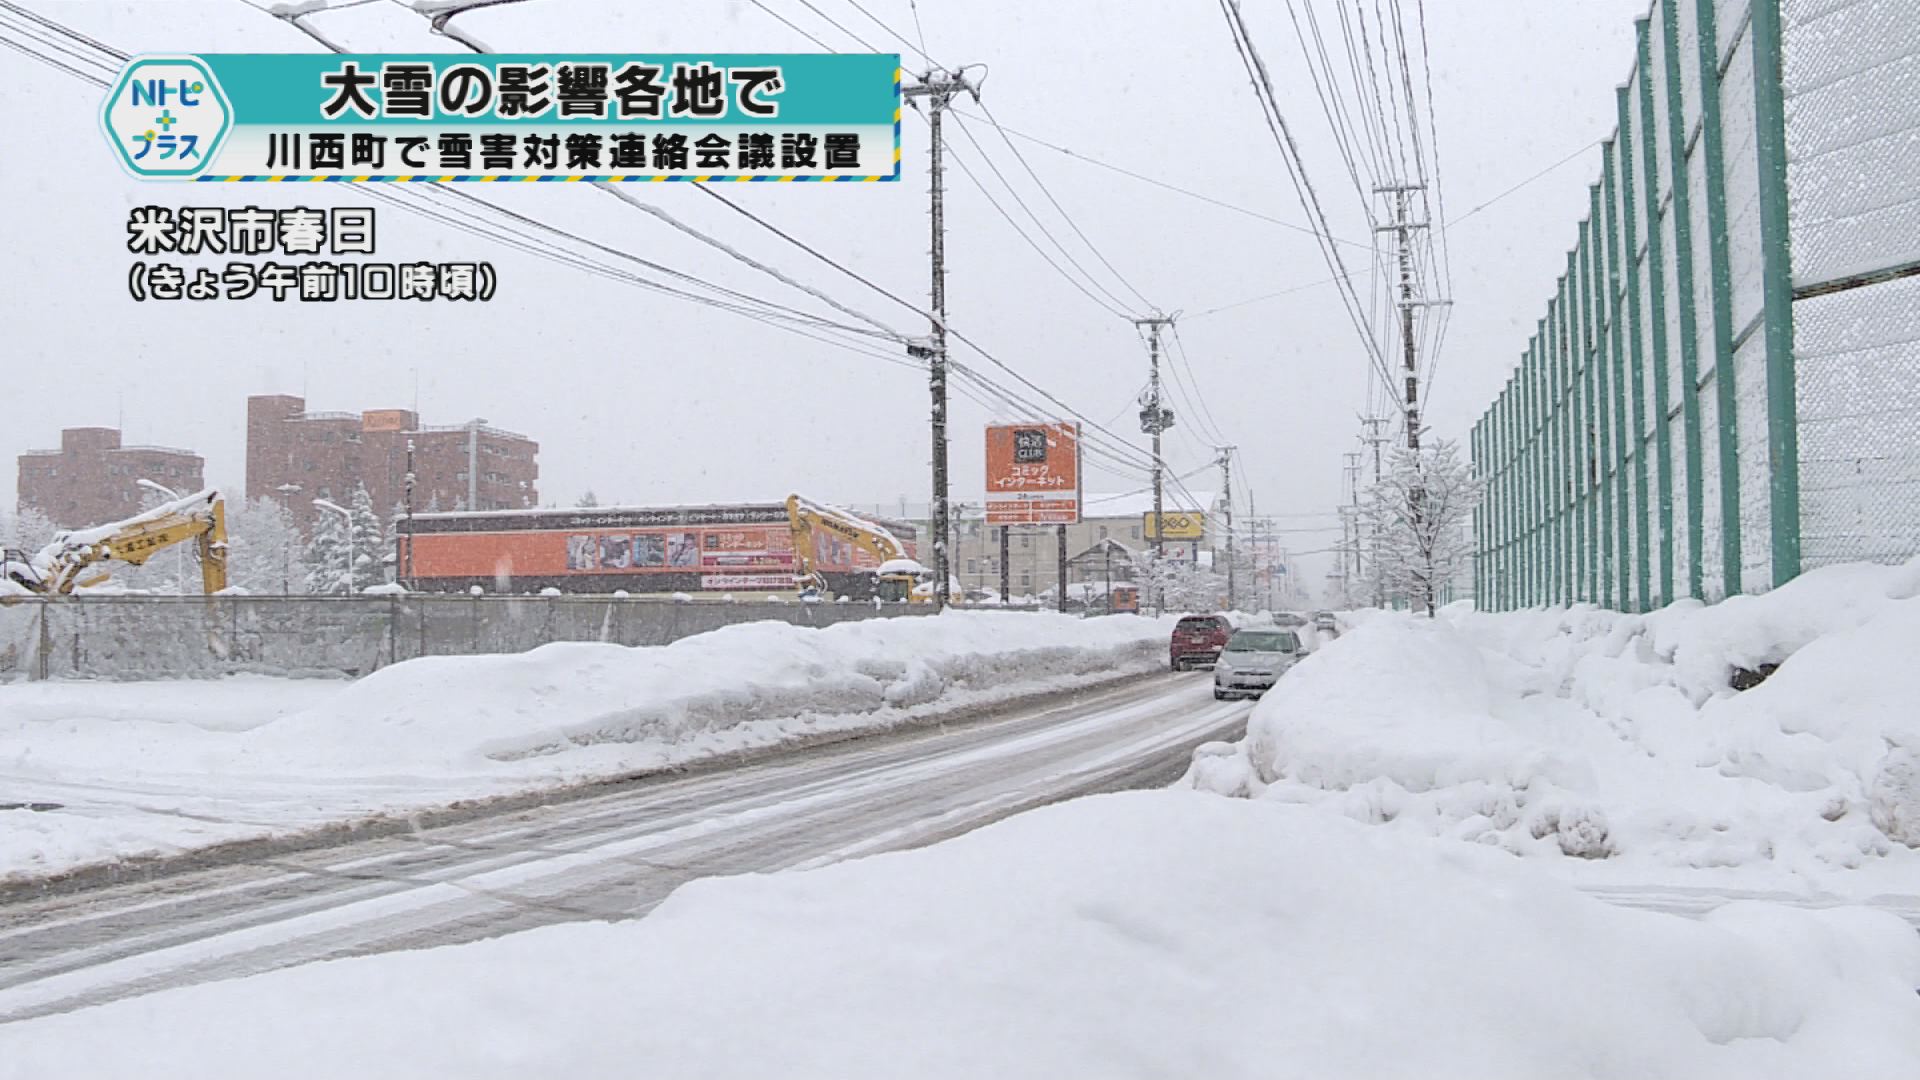 「大雪の影響 各地で」川西町で雪害対策連絡会議設置